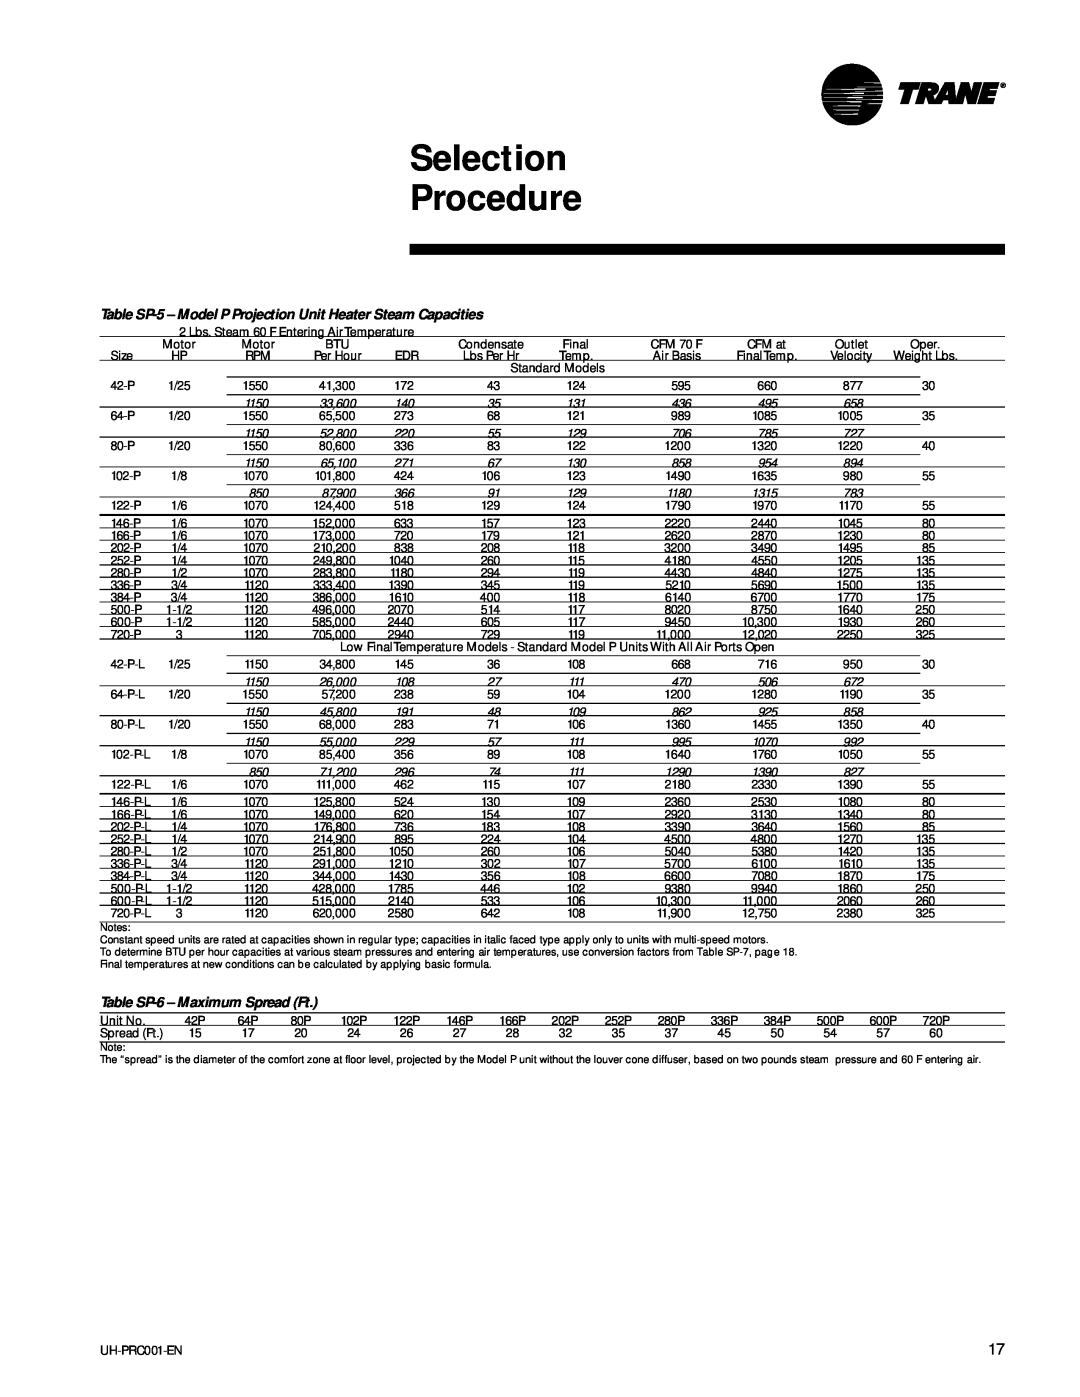 Trane UH-PRC001-EN manual Selection Procedure, Table SP-6- Maximum Spread Ft 